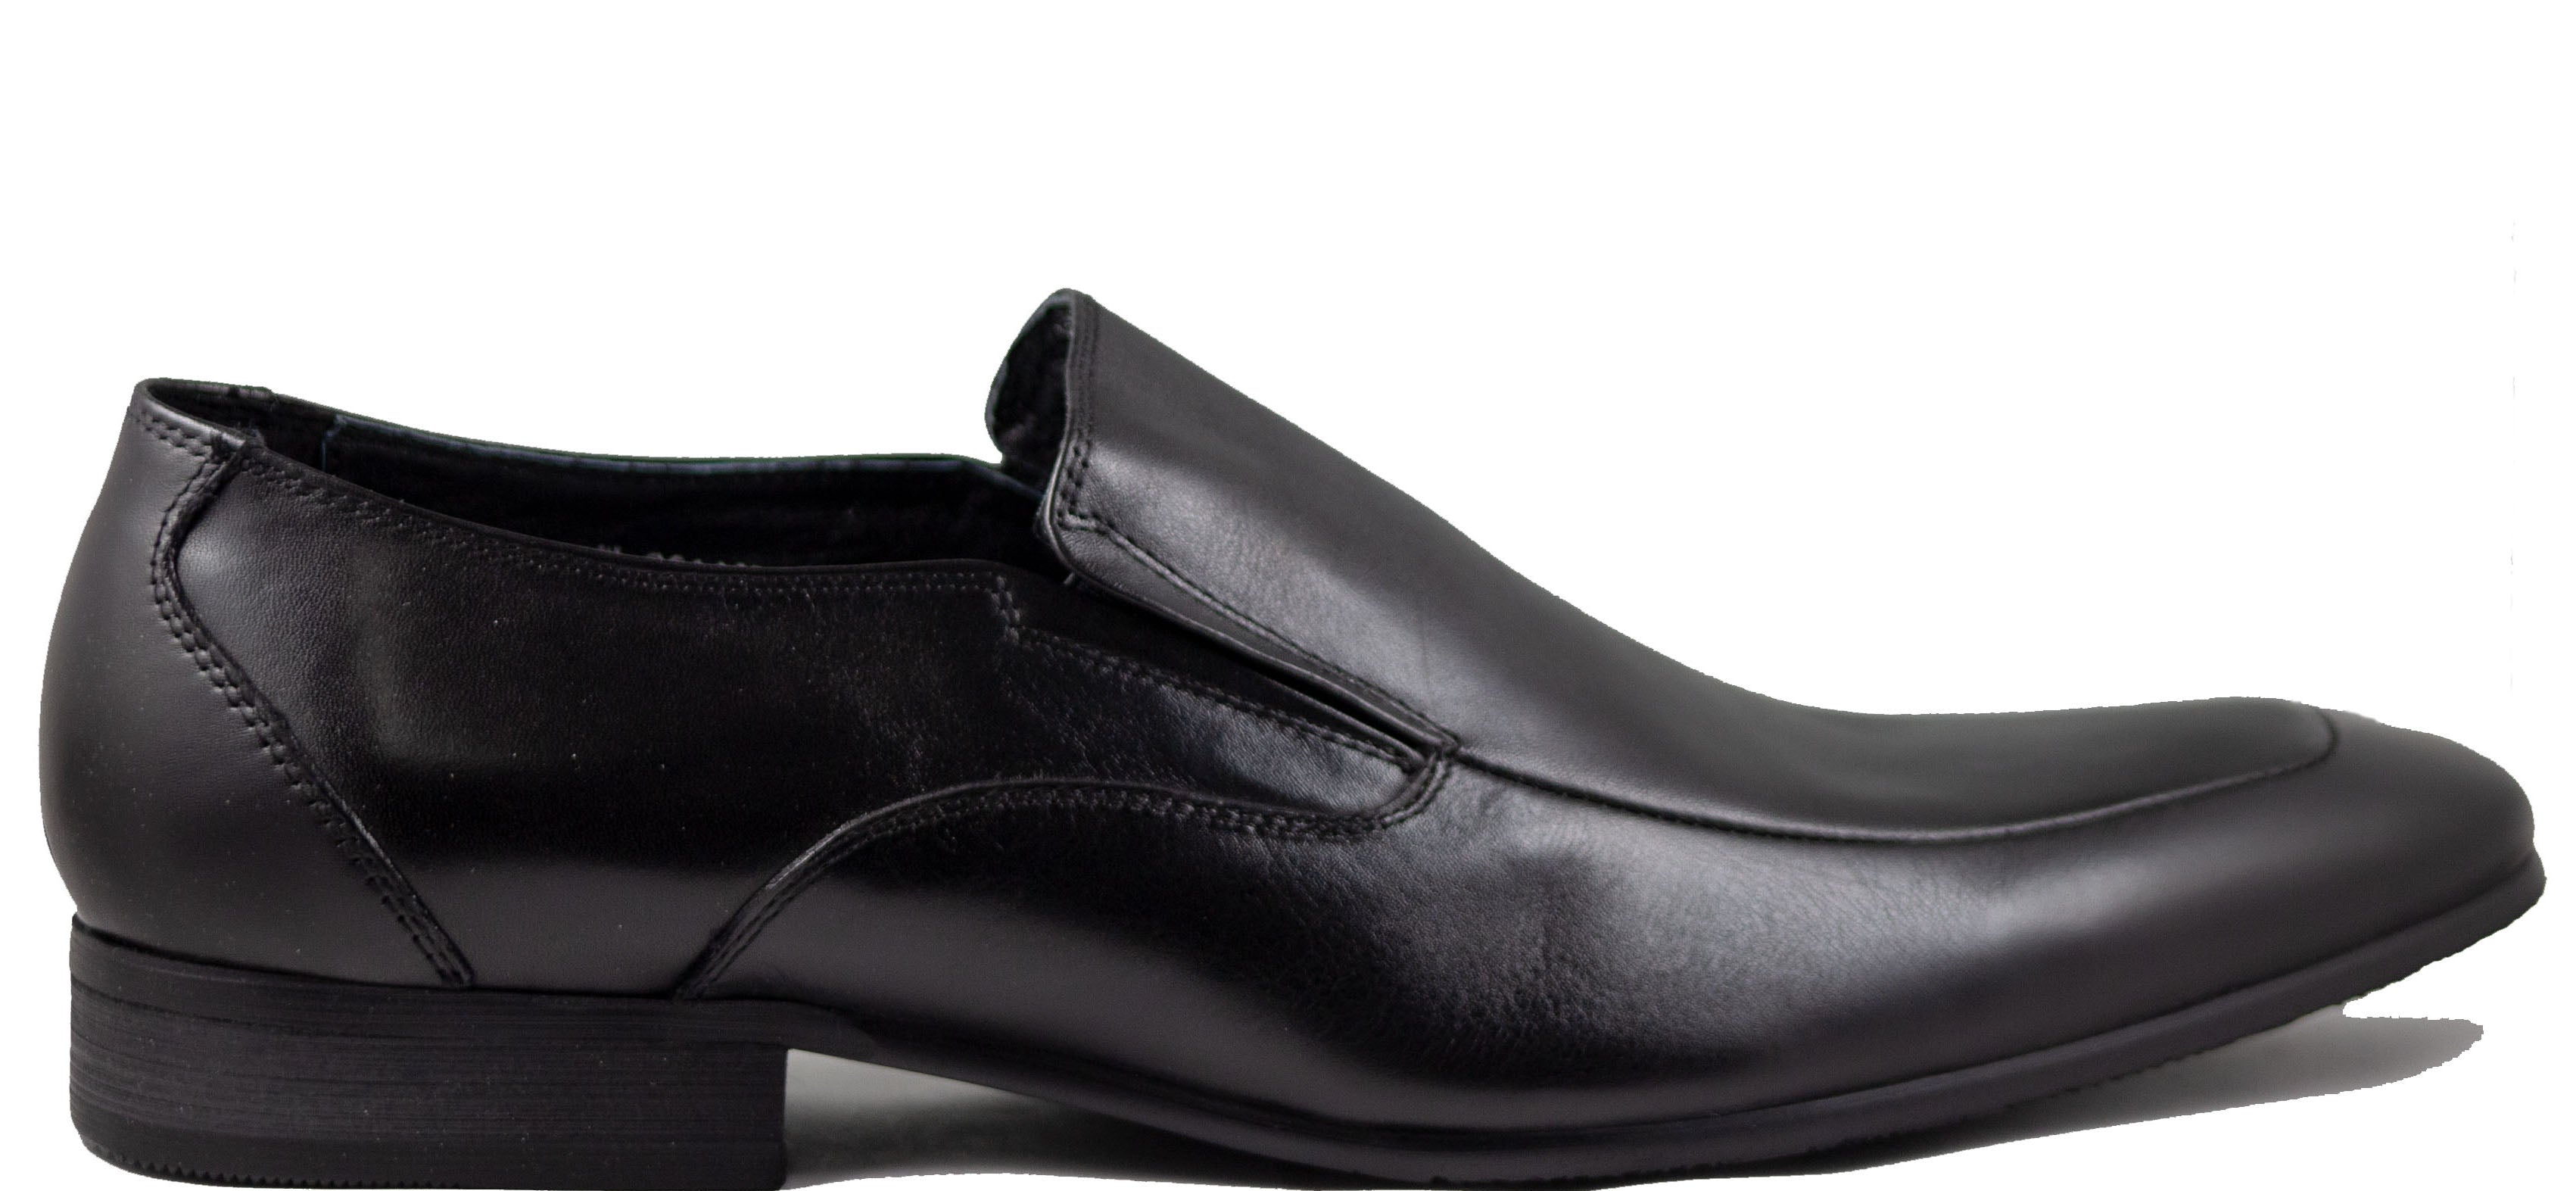 Mario Samello  Men's Dress Shoes   LX1406-W5A